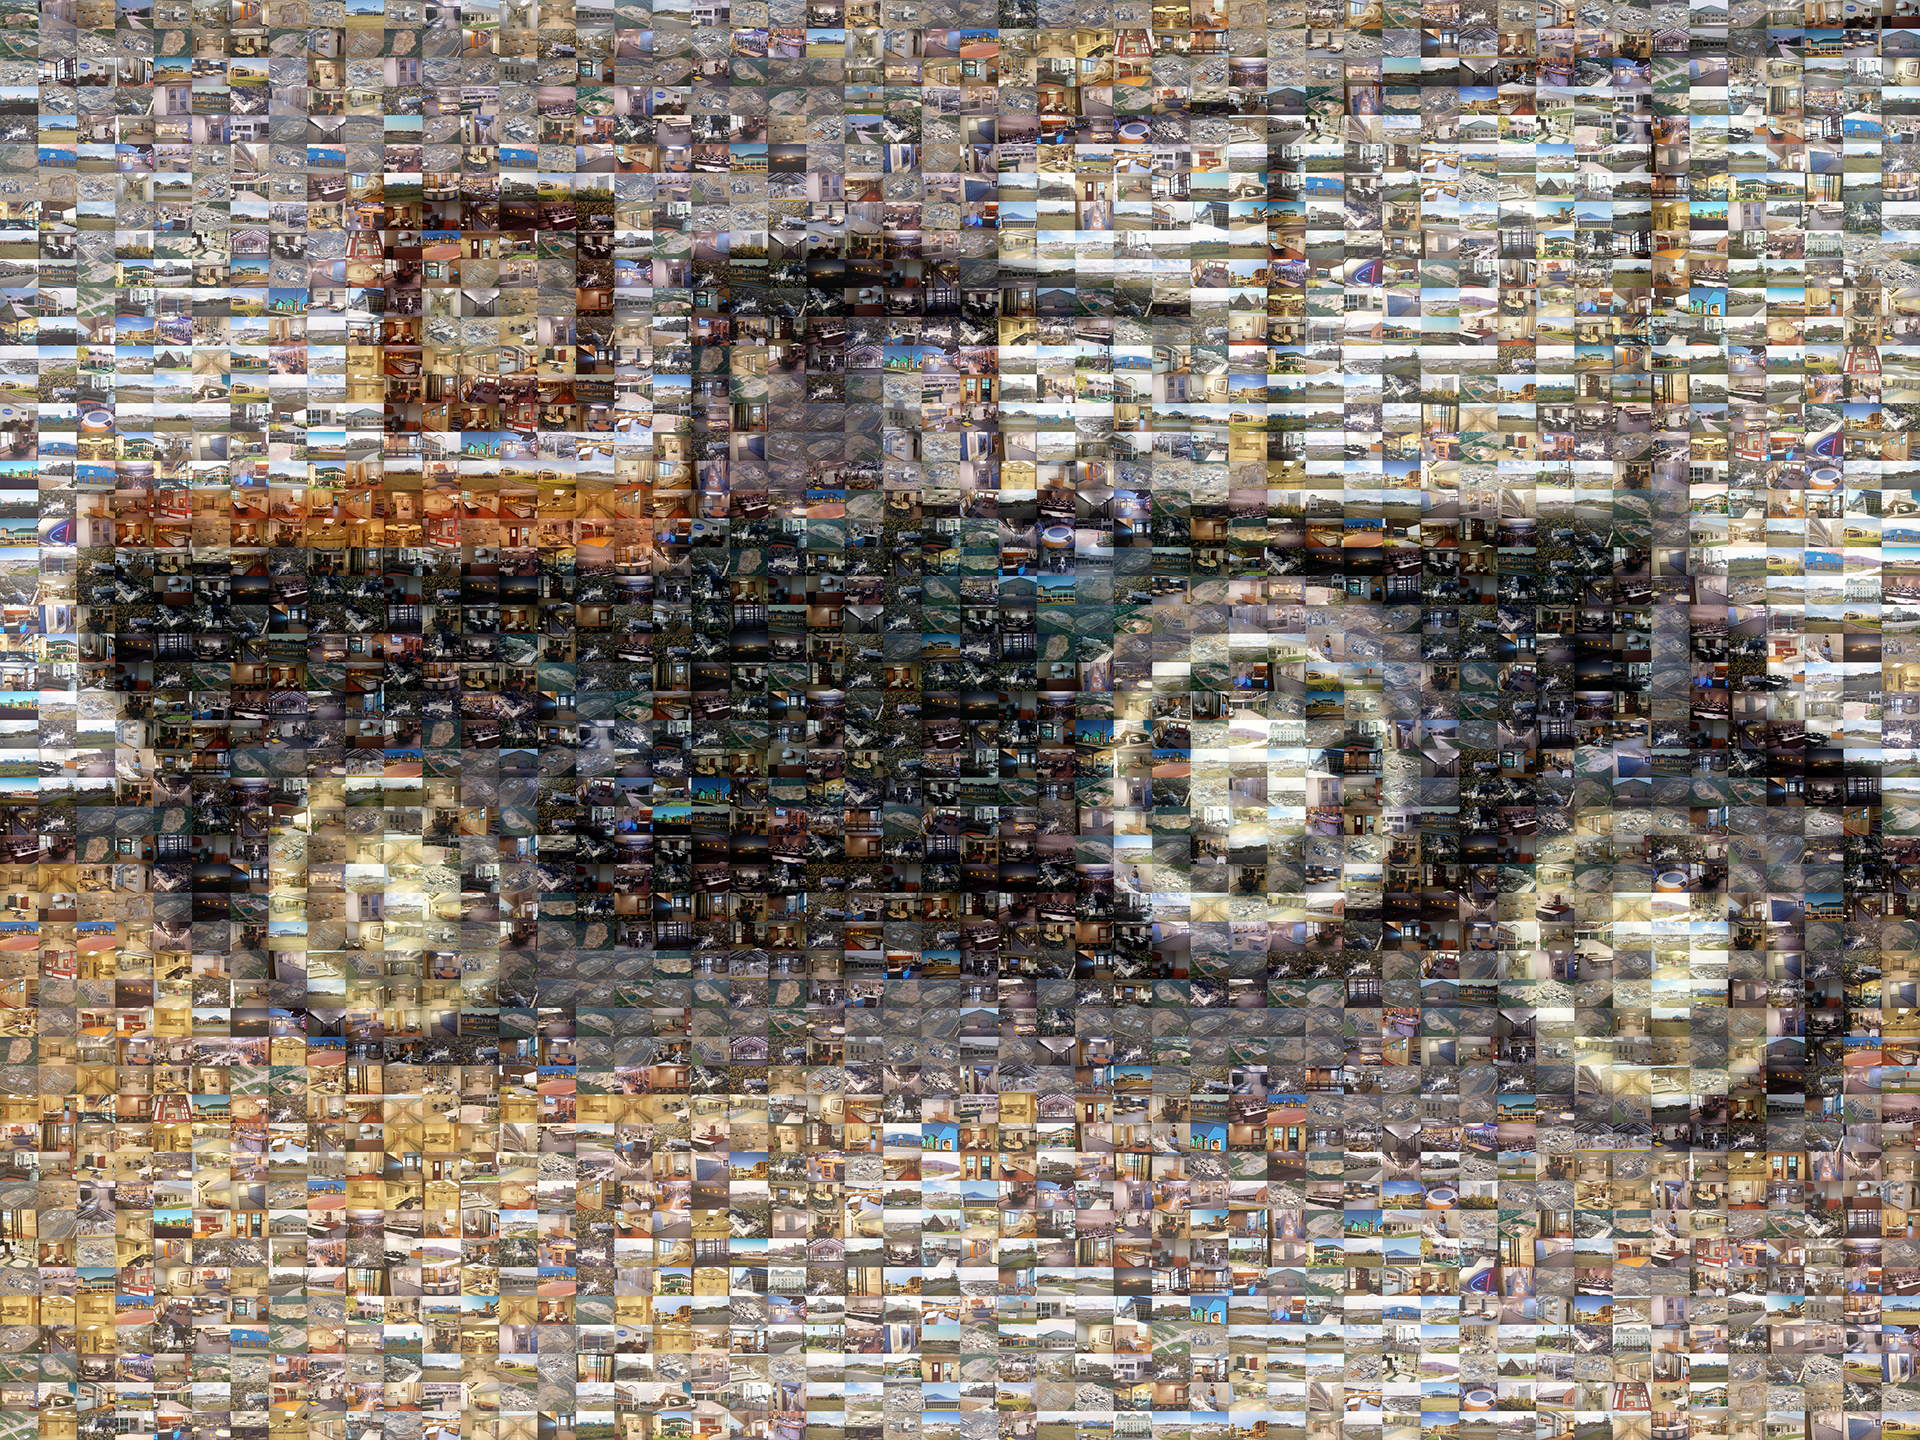 photo mosaic created using 325 company photos